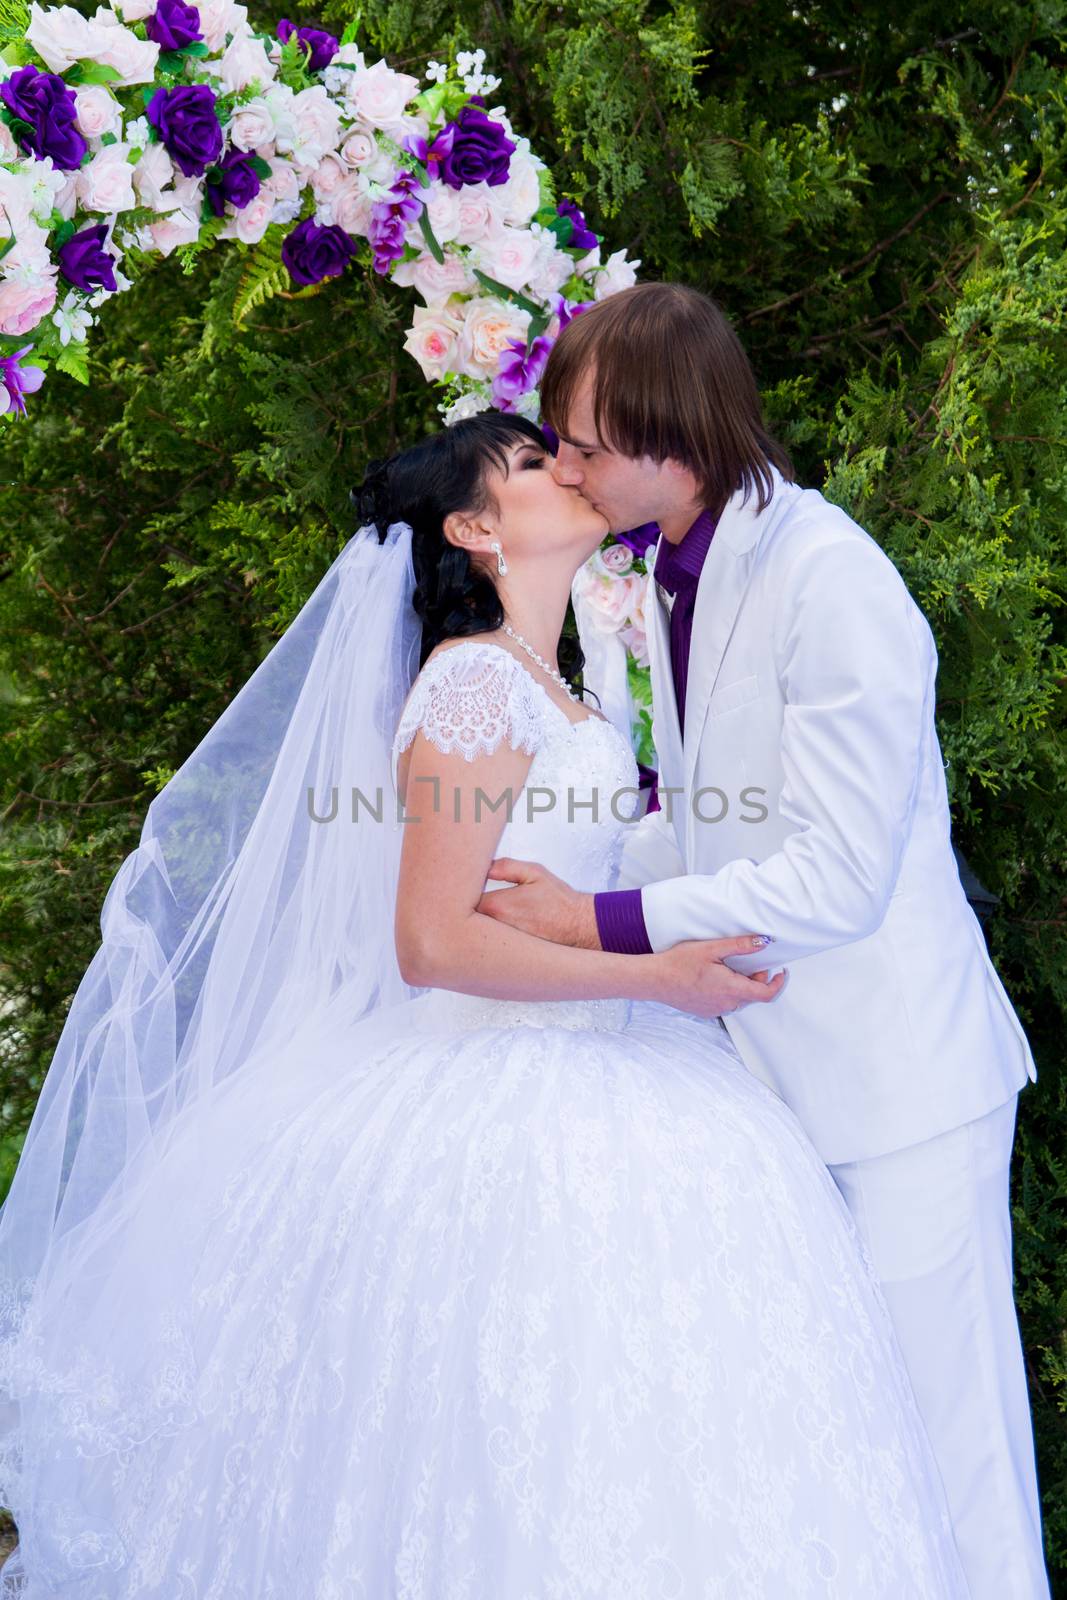 beautiful wedding bride and groom by serhii_lohvyniuk